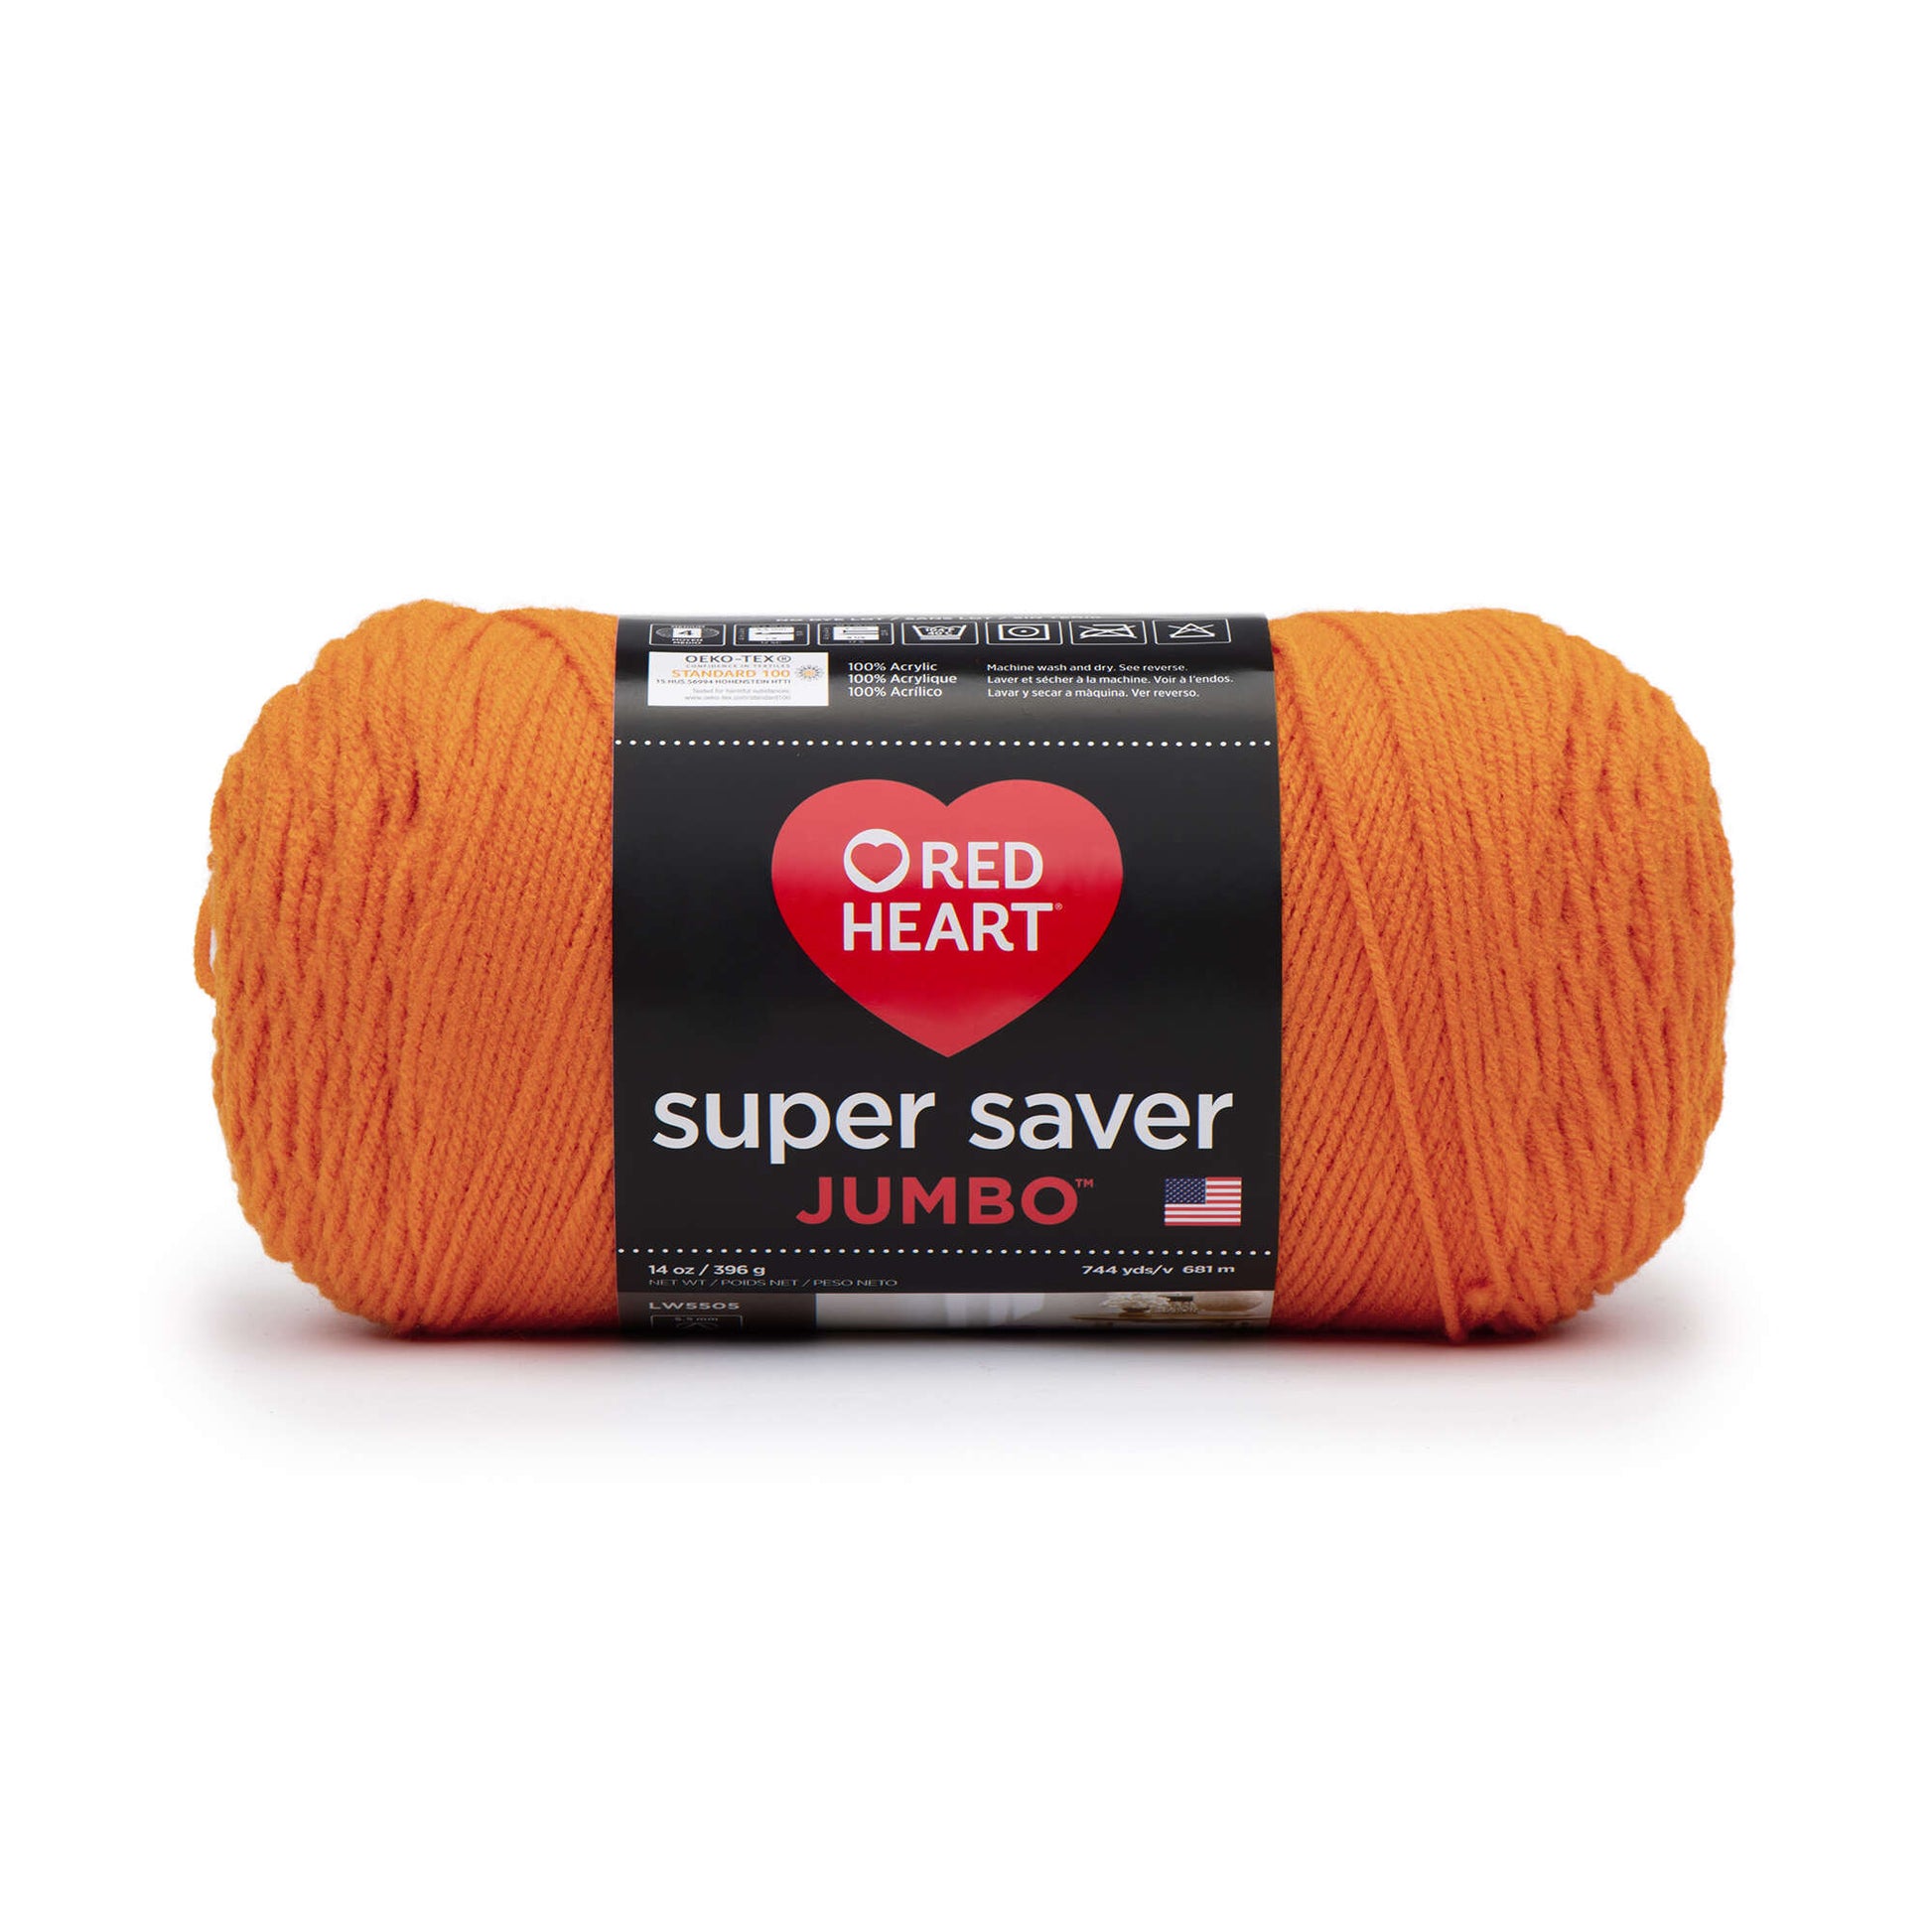 Red Heart Super Saver Jumbo Yarn